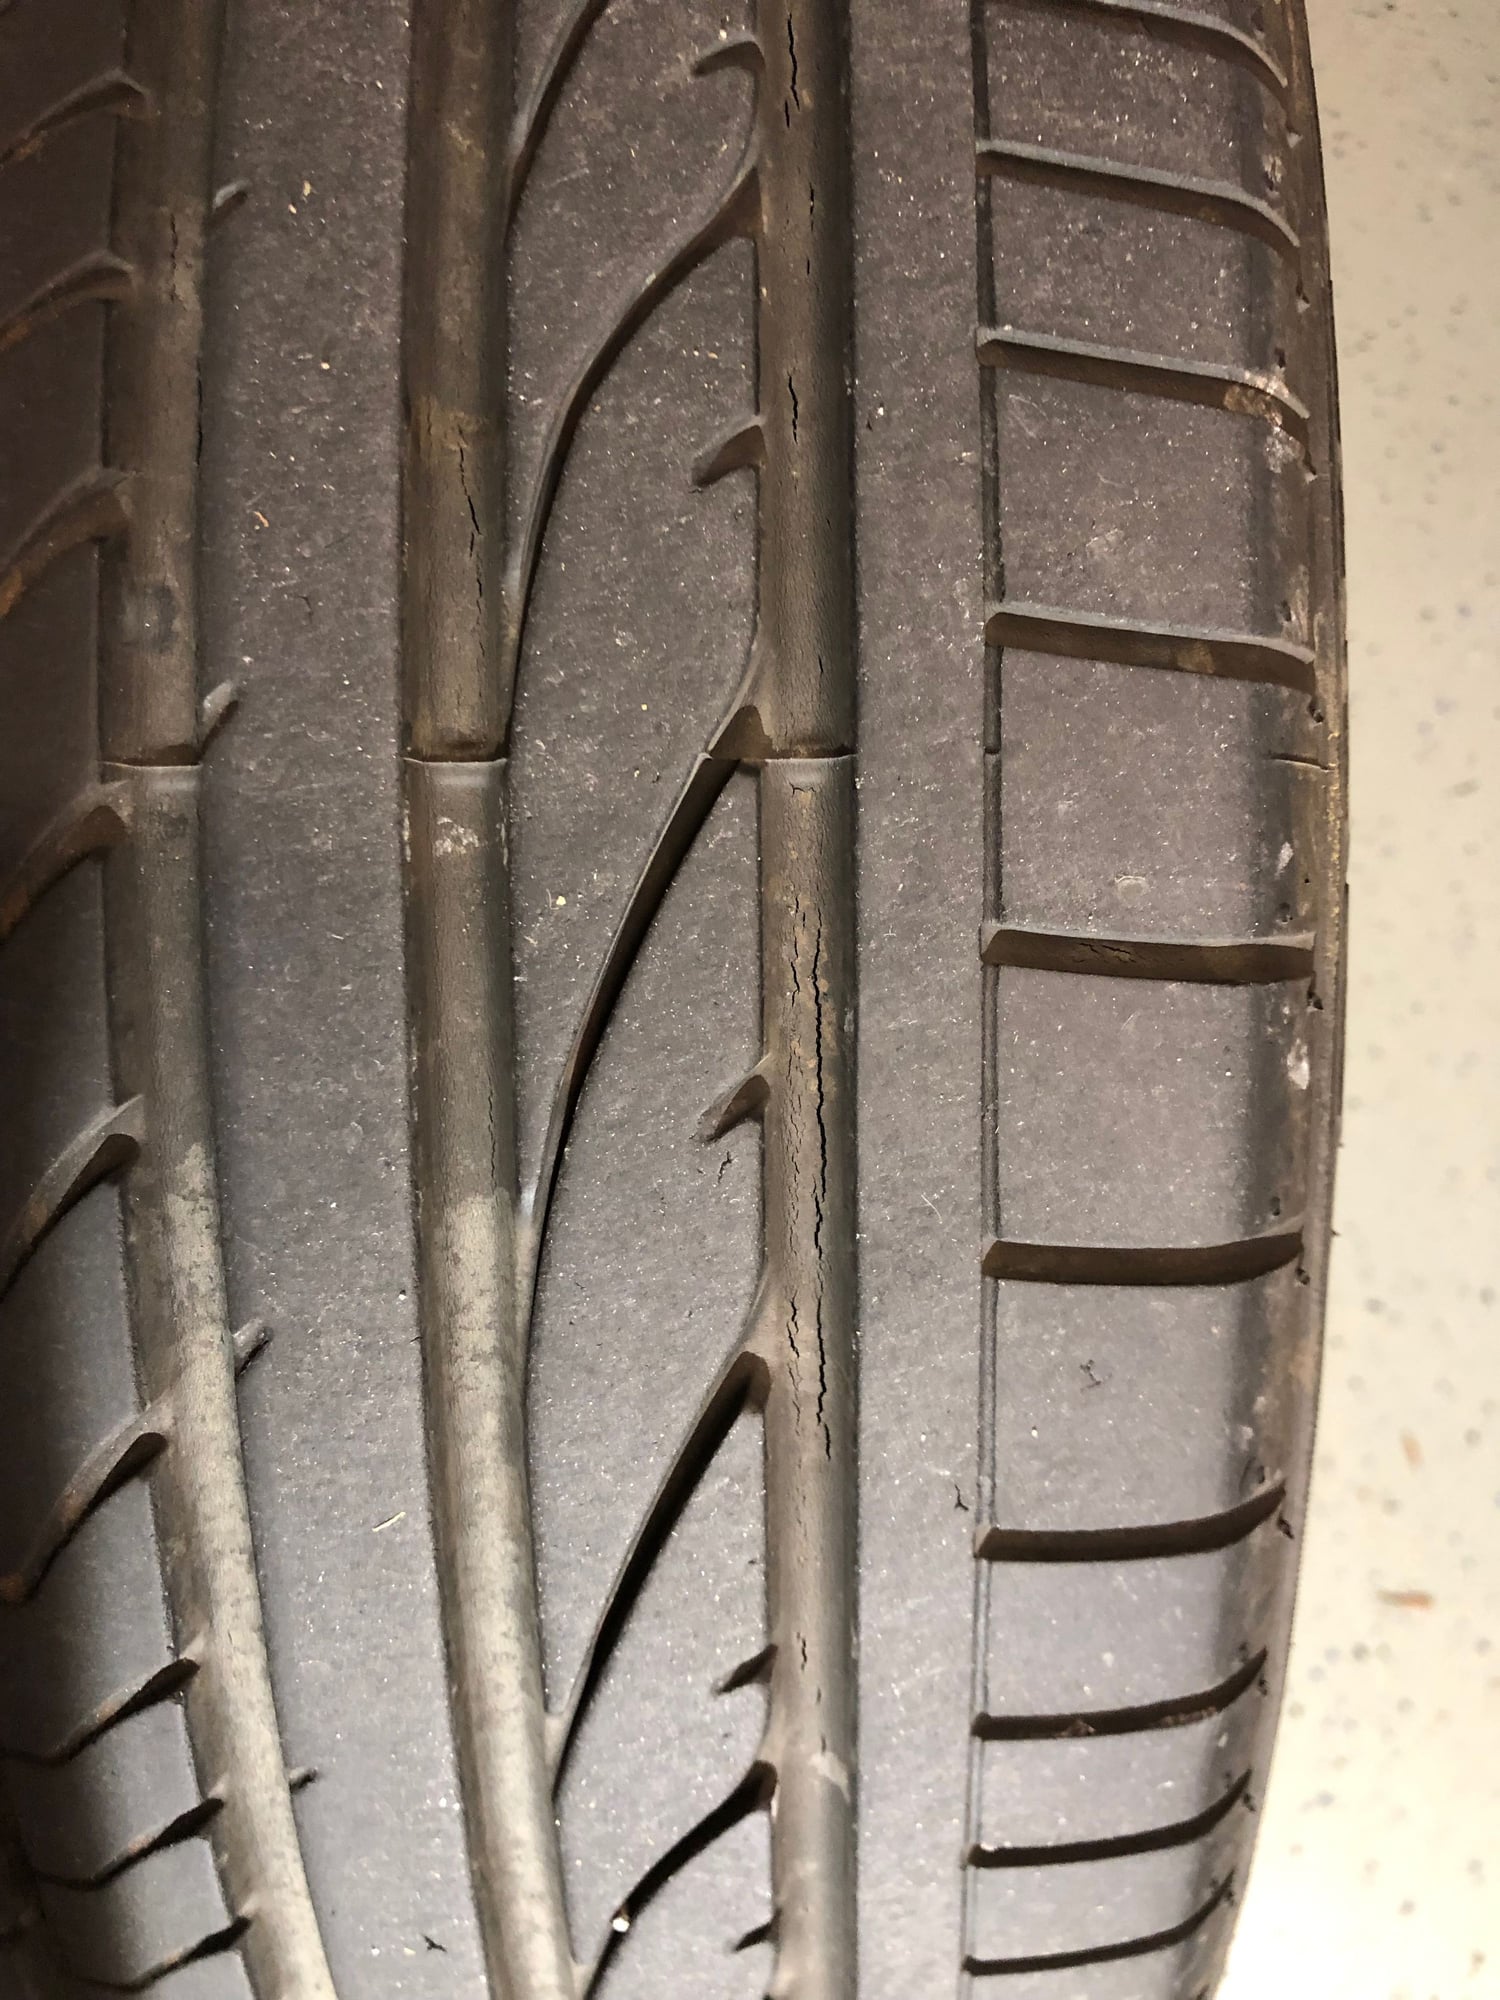 Cracks inside tire tread - replace? - 6SpeedOnline - Porsche Forum and